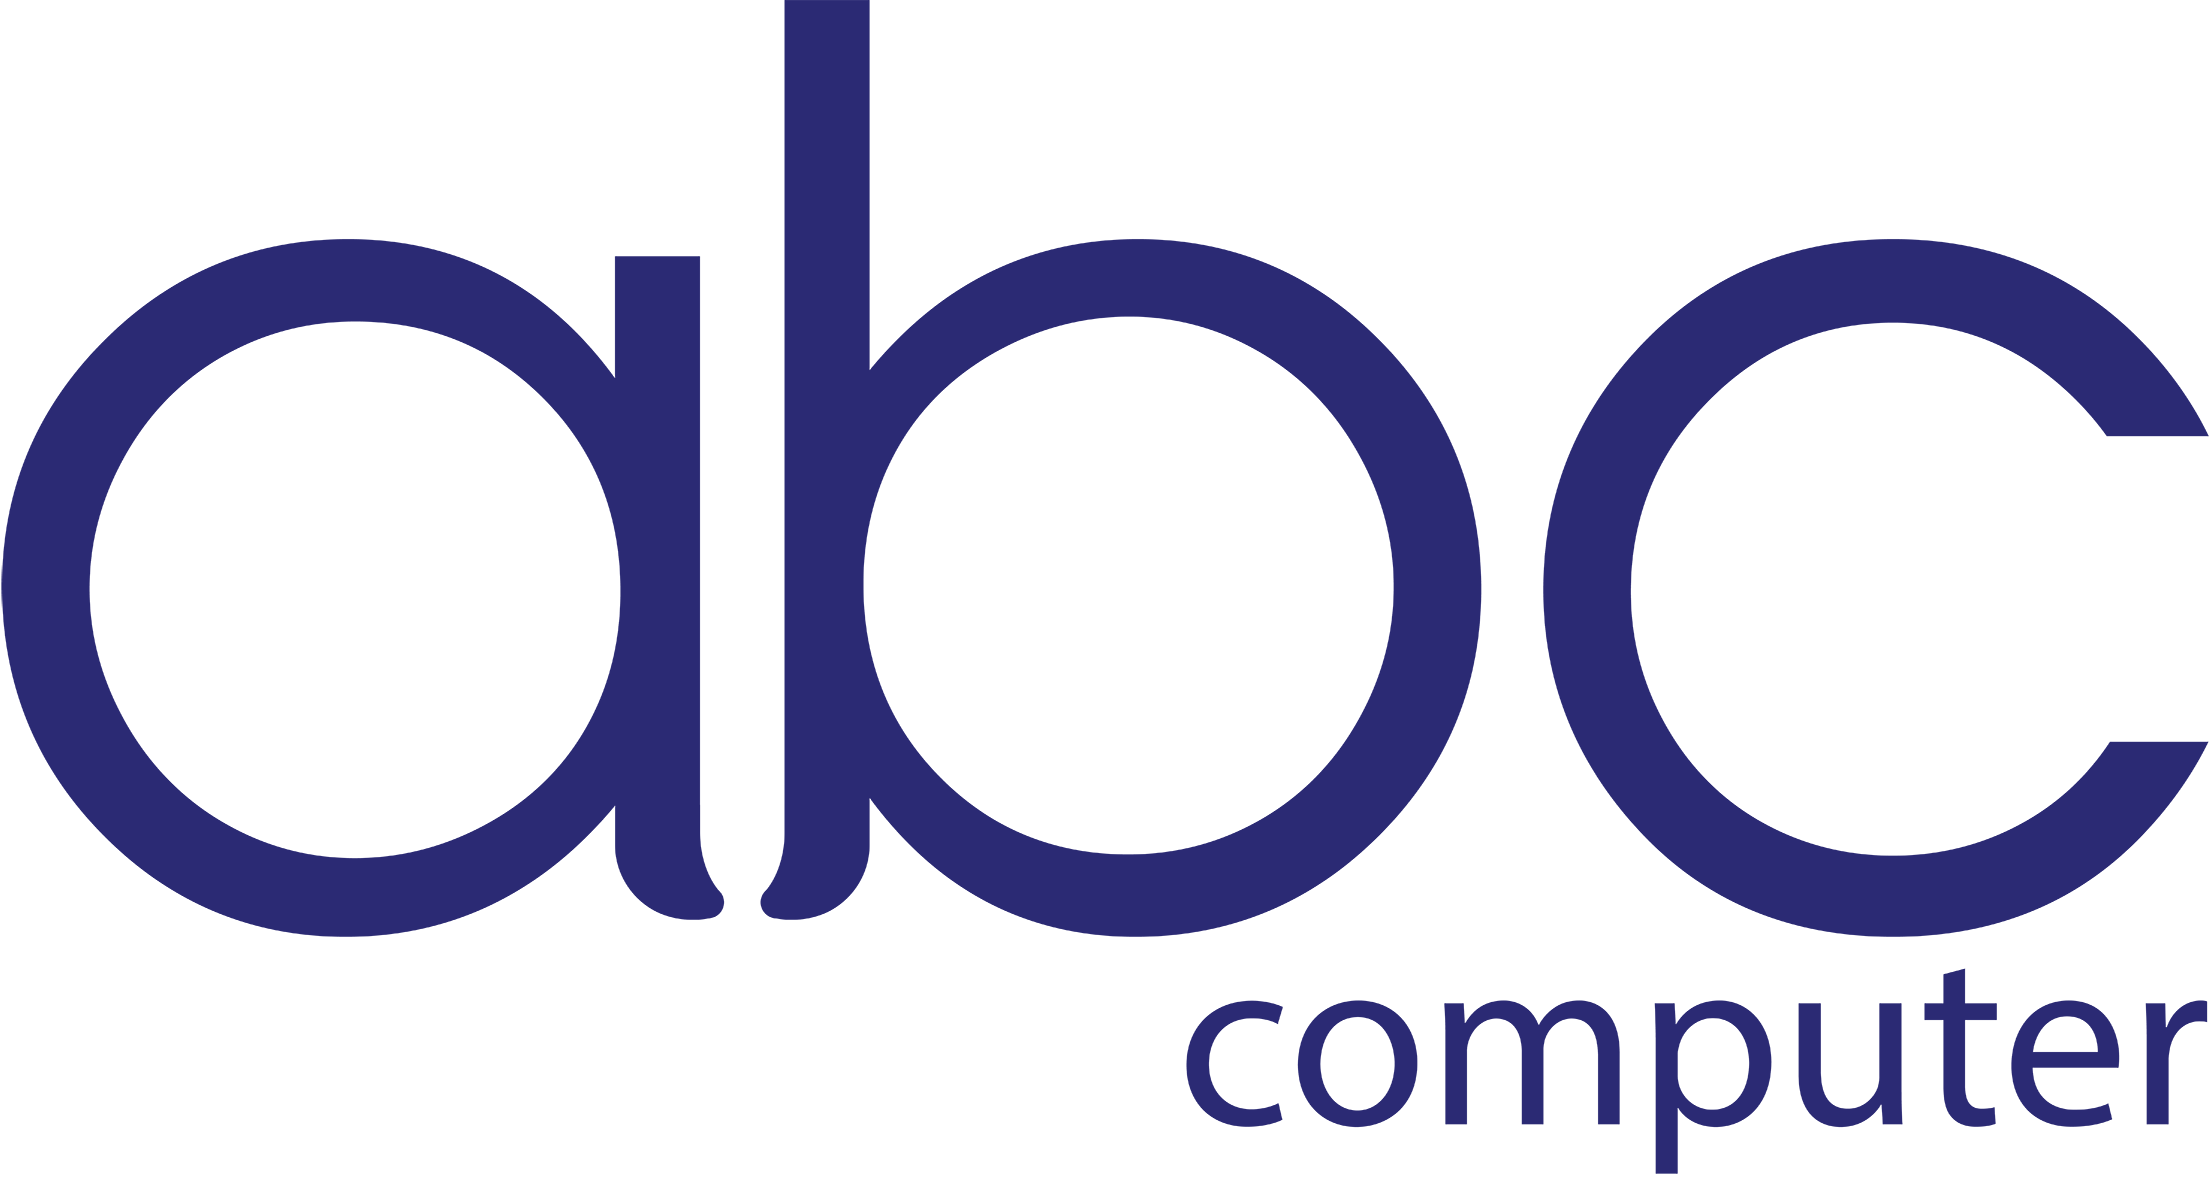 ABC Computer